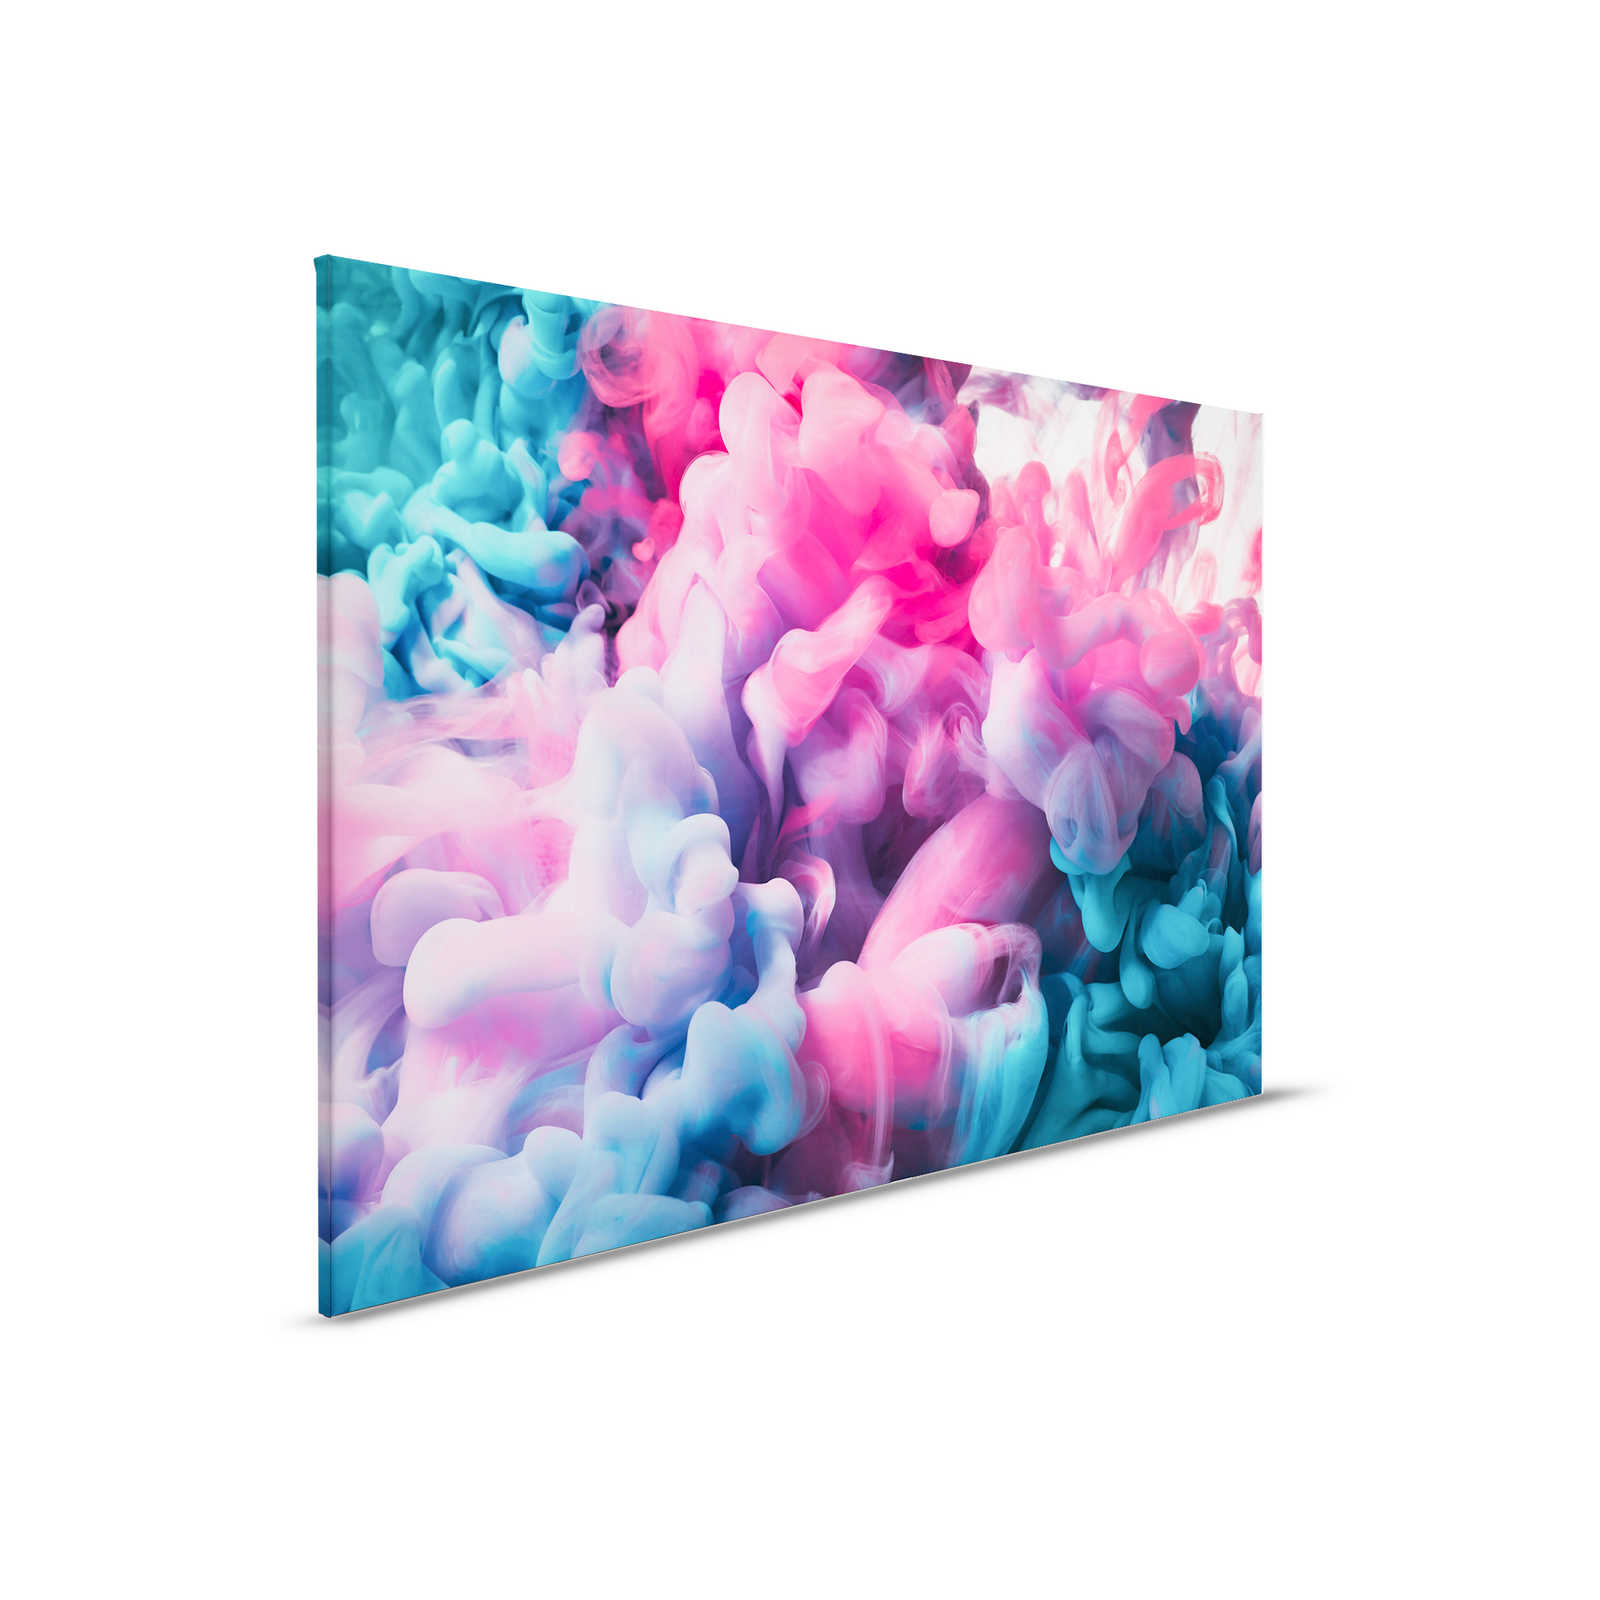         Farbiger Rauch Leinwand |Rosa, Blau, Weiß – 0,90 m x 0,60 m
    